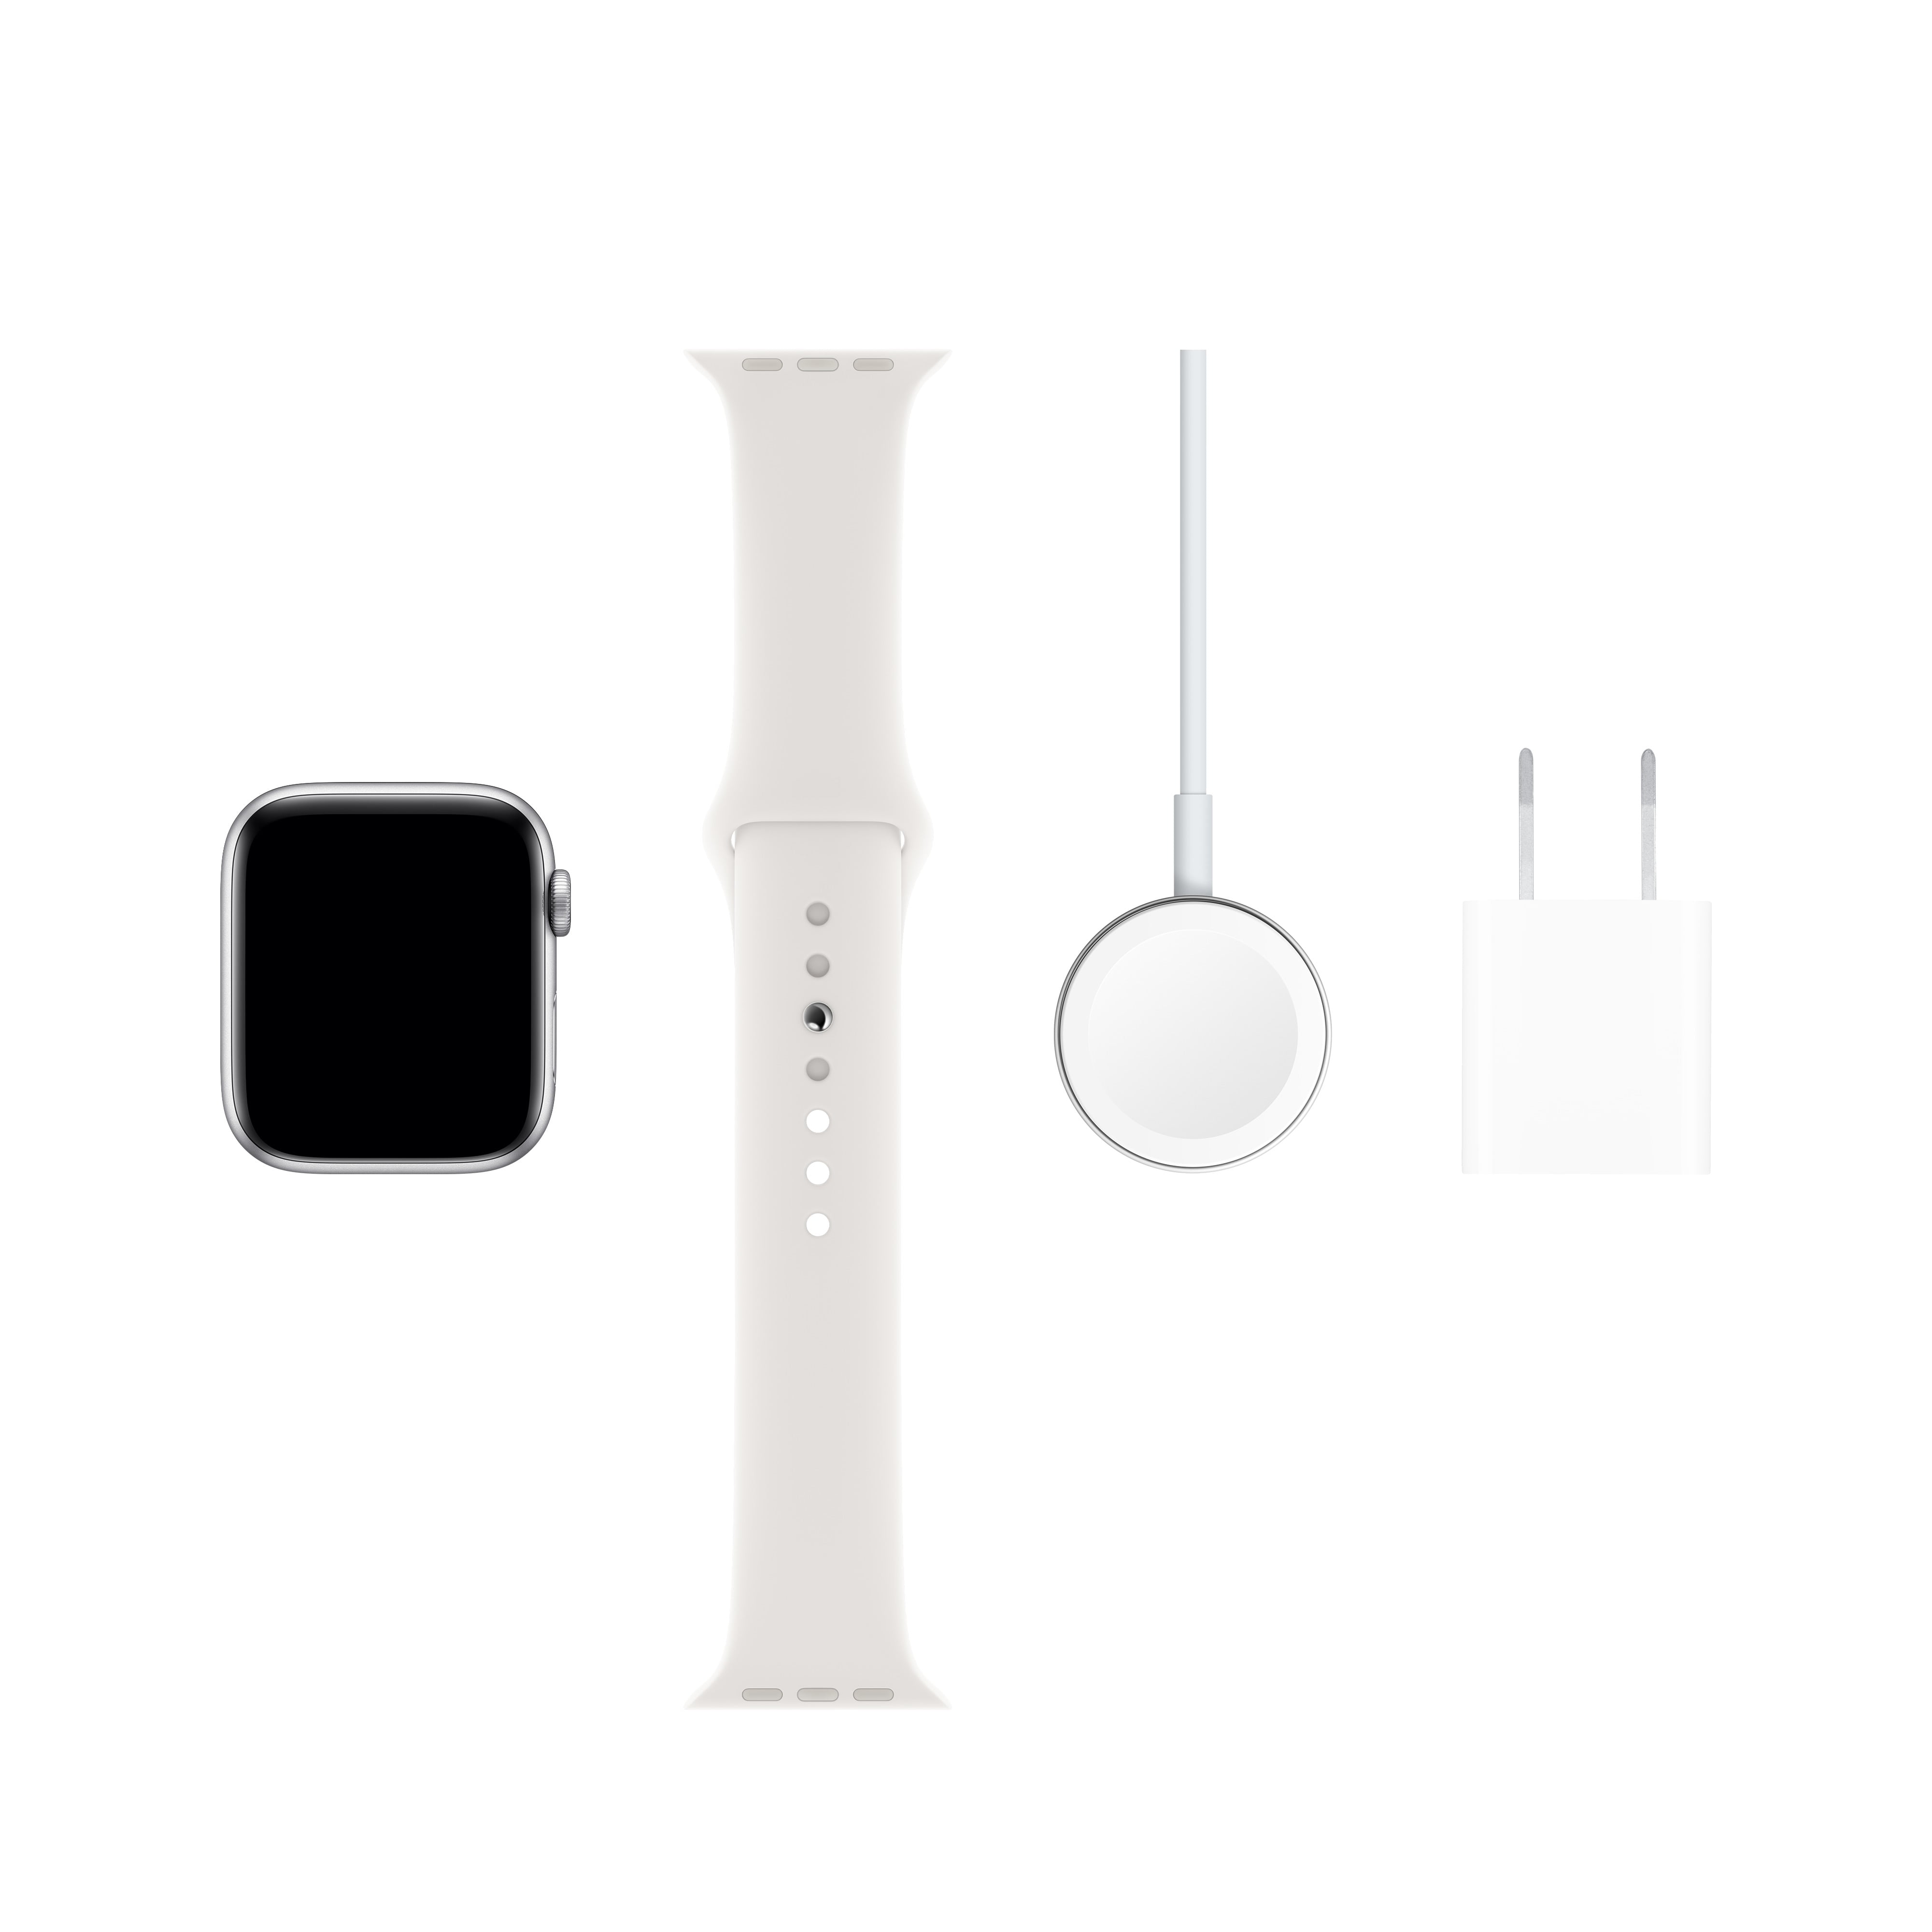 Apple Watch Series 5 GPS